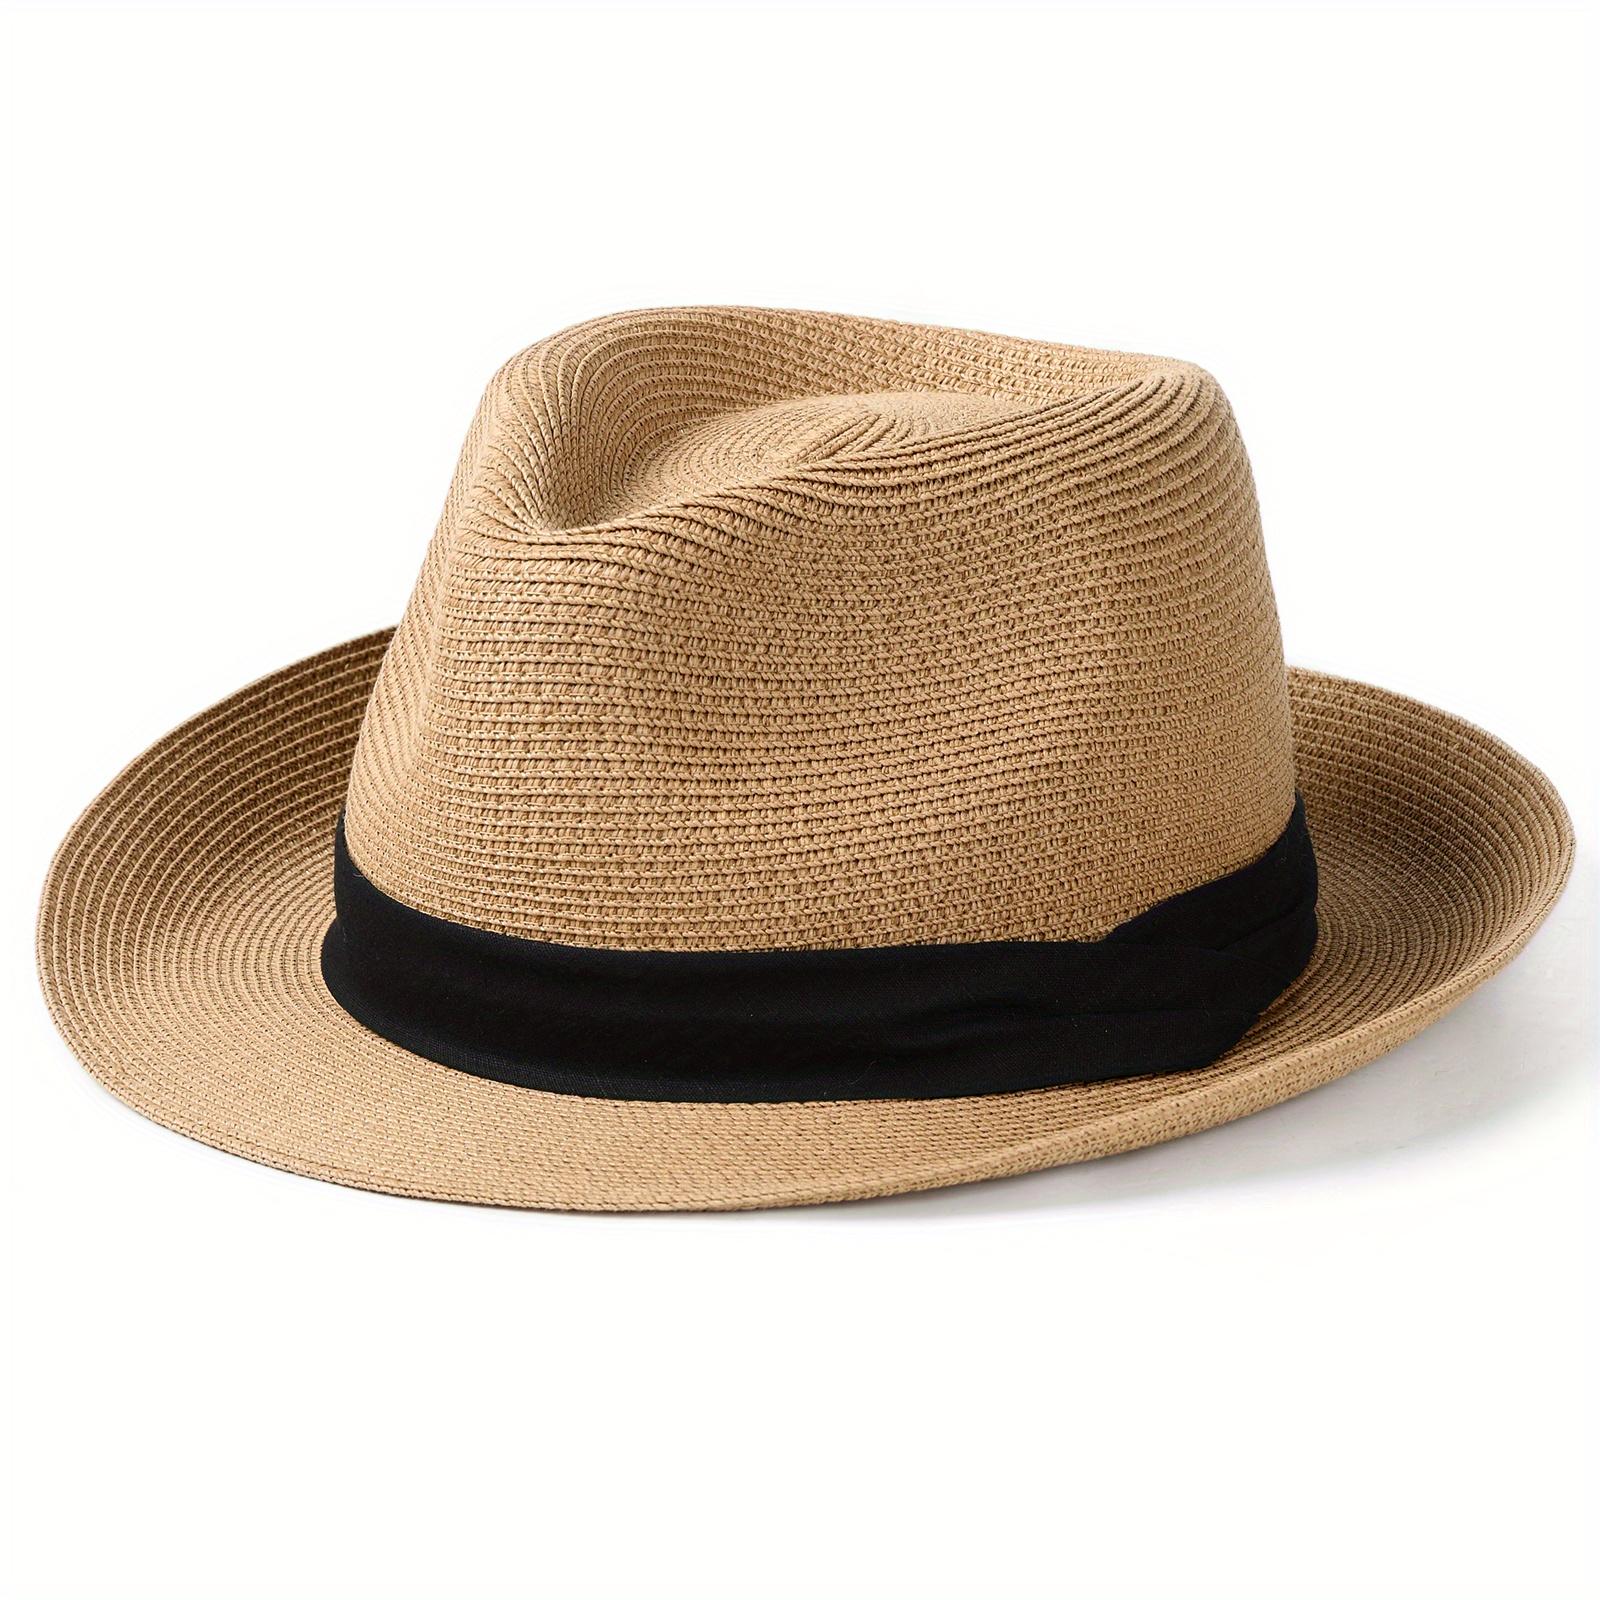 Funtery 12 Pack Straw Hat for Men Summer Large Brim Farmer Hat